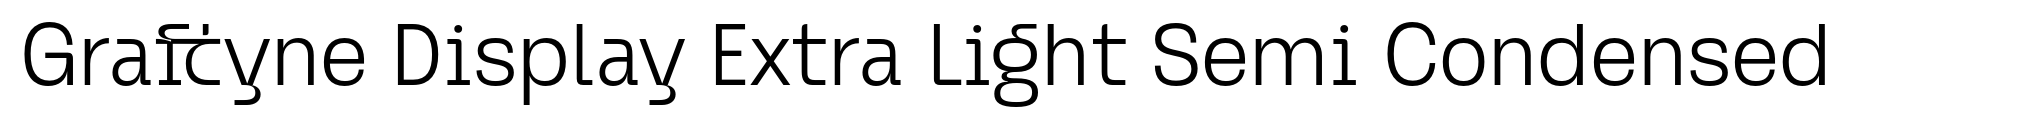 Graftyne Display Extra Light Semi Condensed image